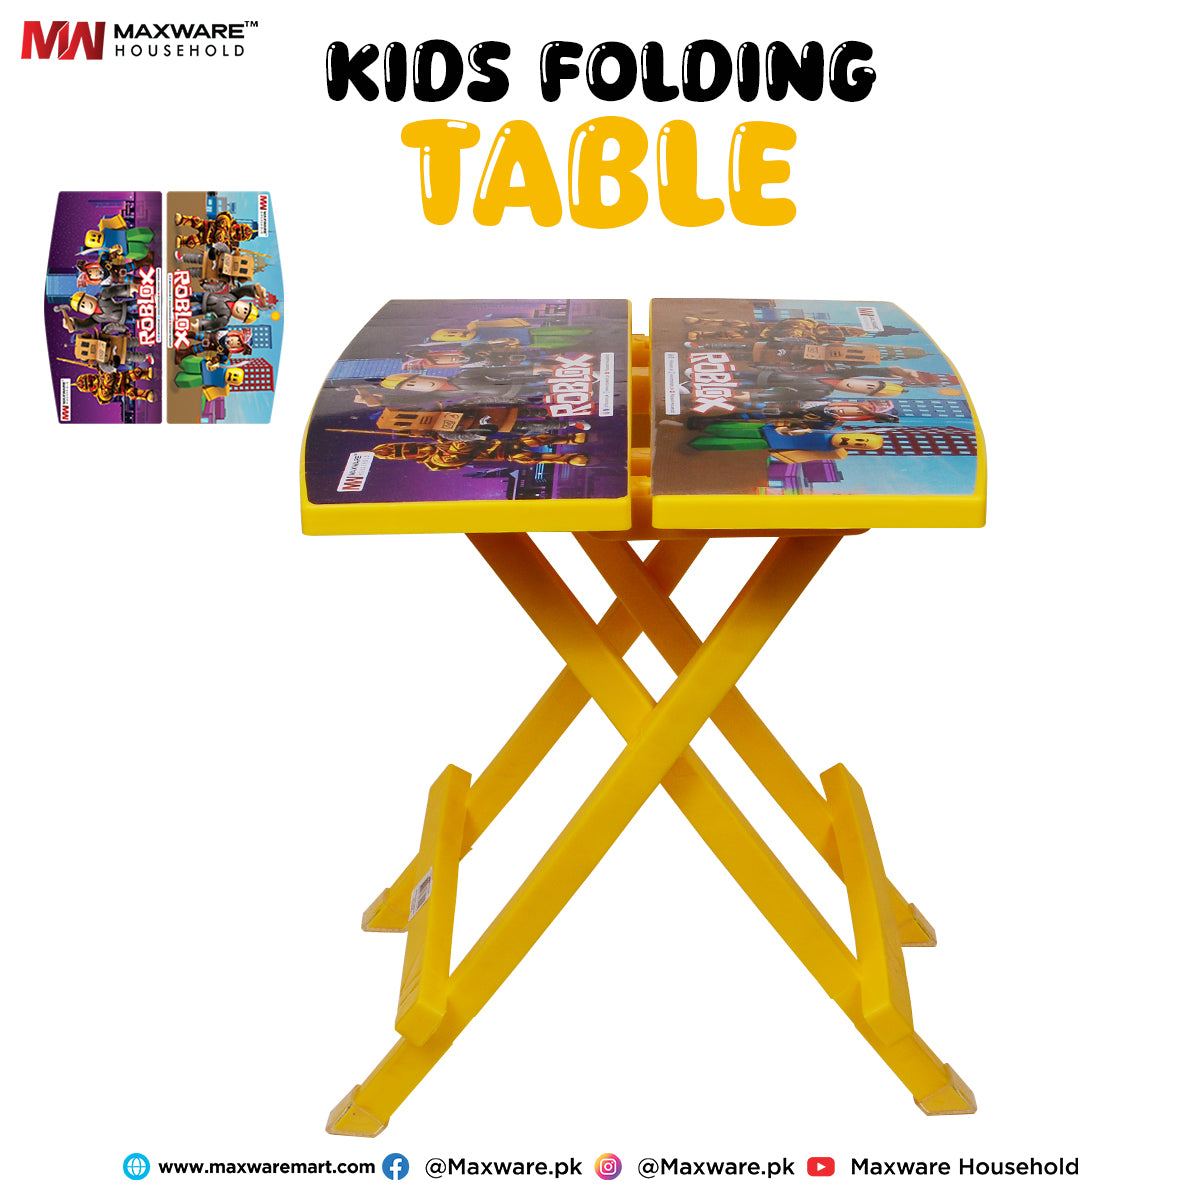 Kids Folding Table